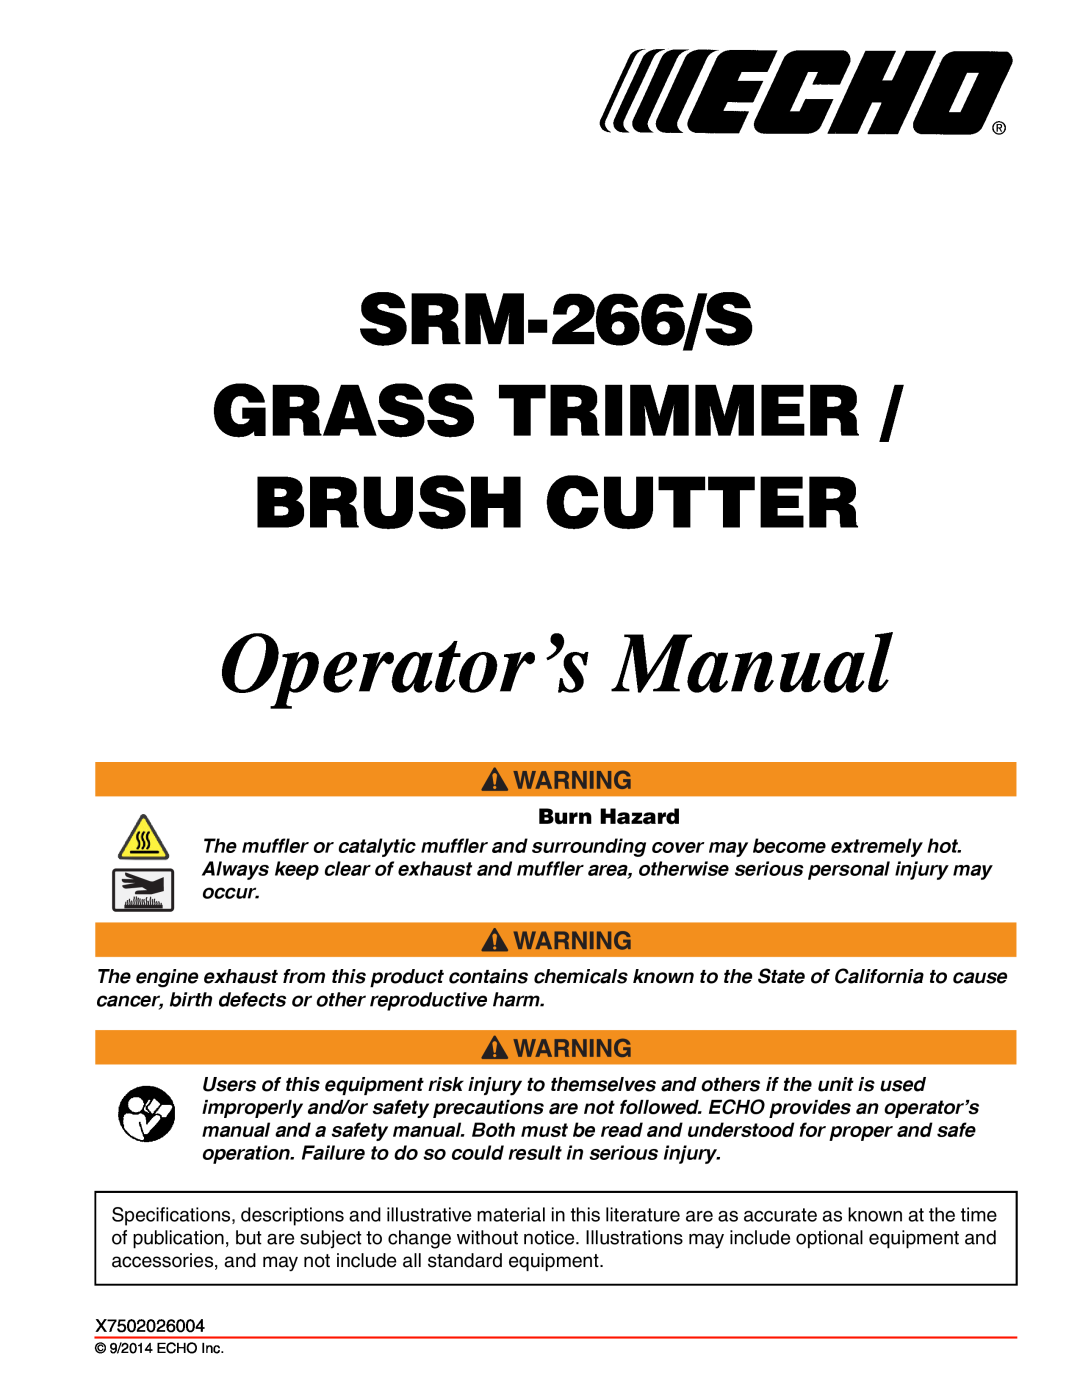 Echo specifications Burn Hazard, Operator’s Manual, SRM-266/S GRASS TRIMMER BRUSH CUTTER 